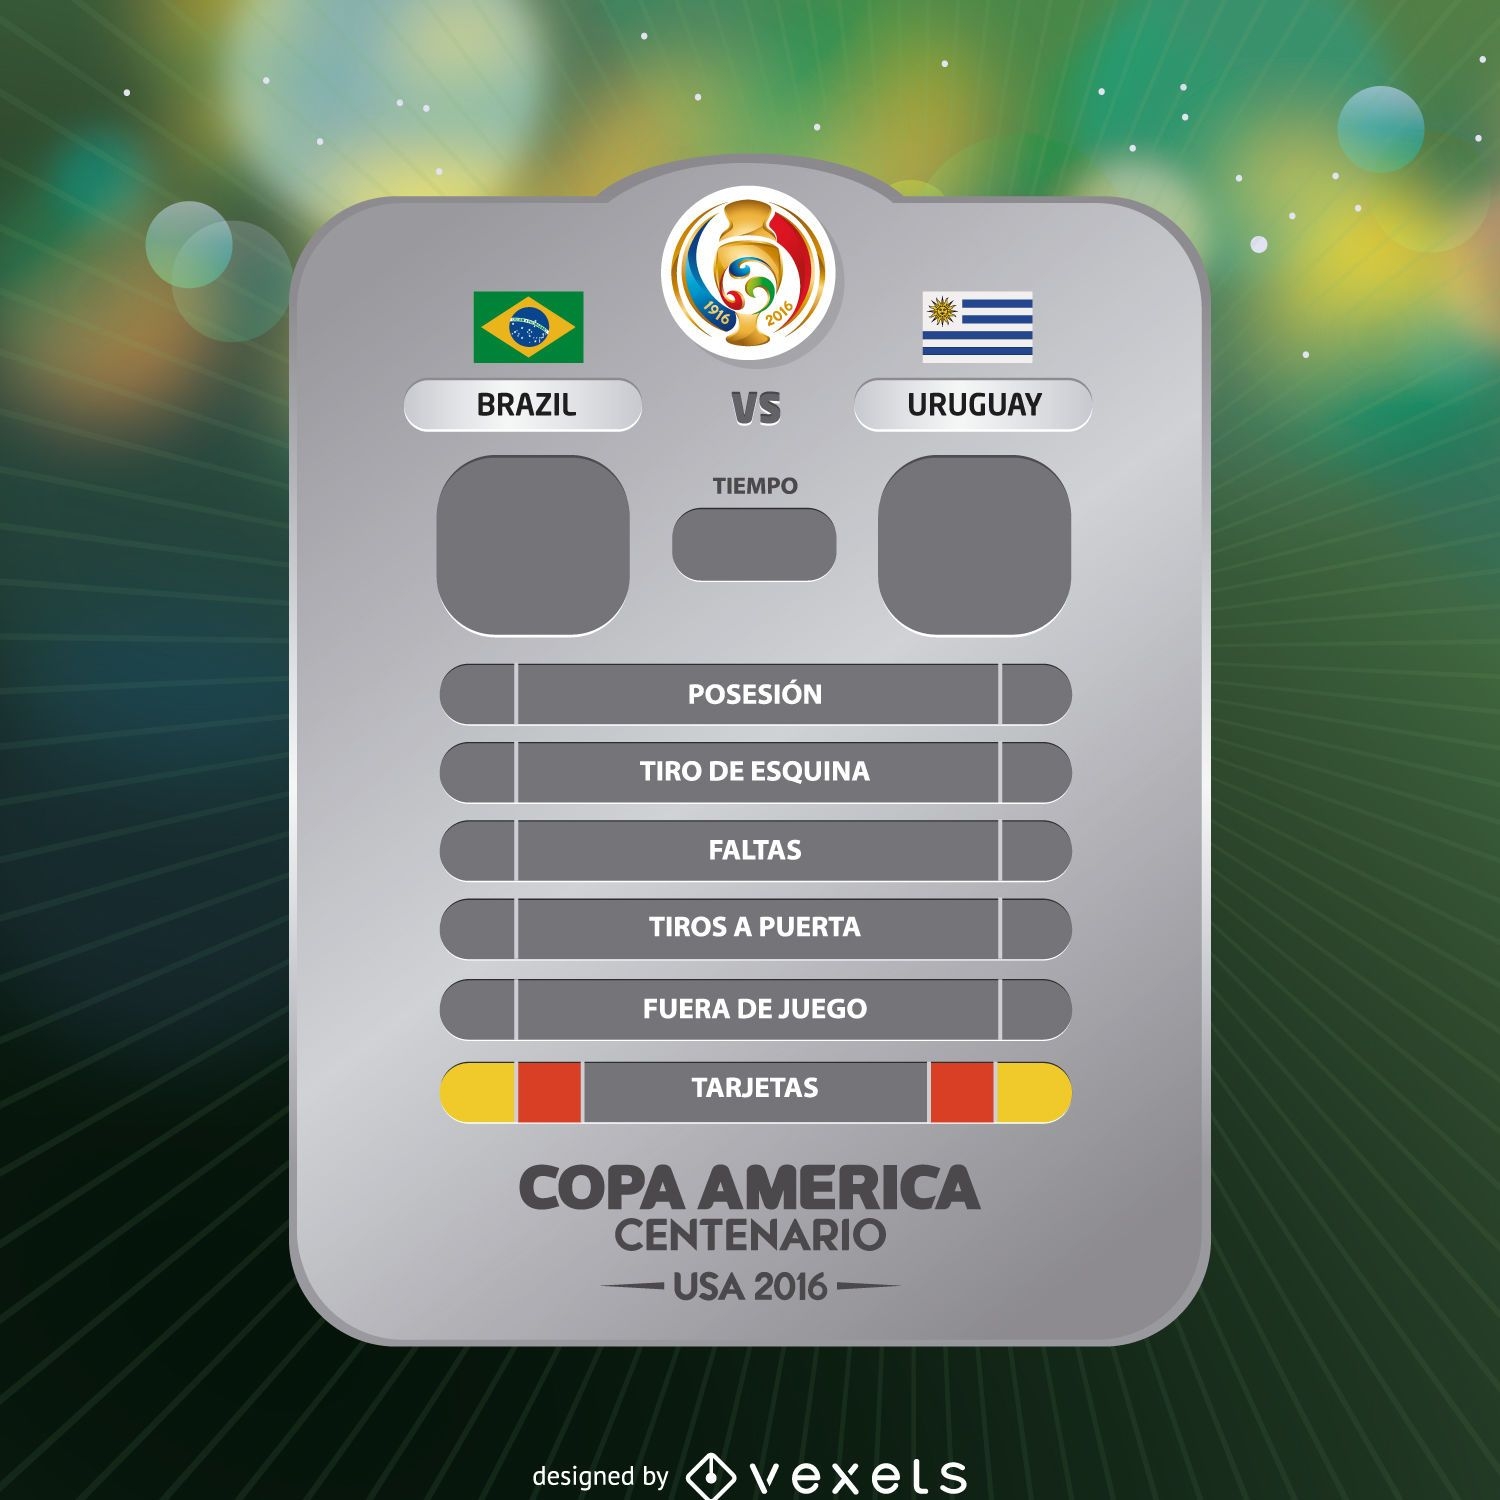 Copa América News, Scores, & Standings